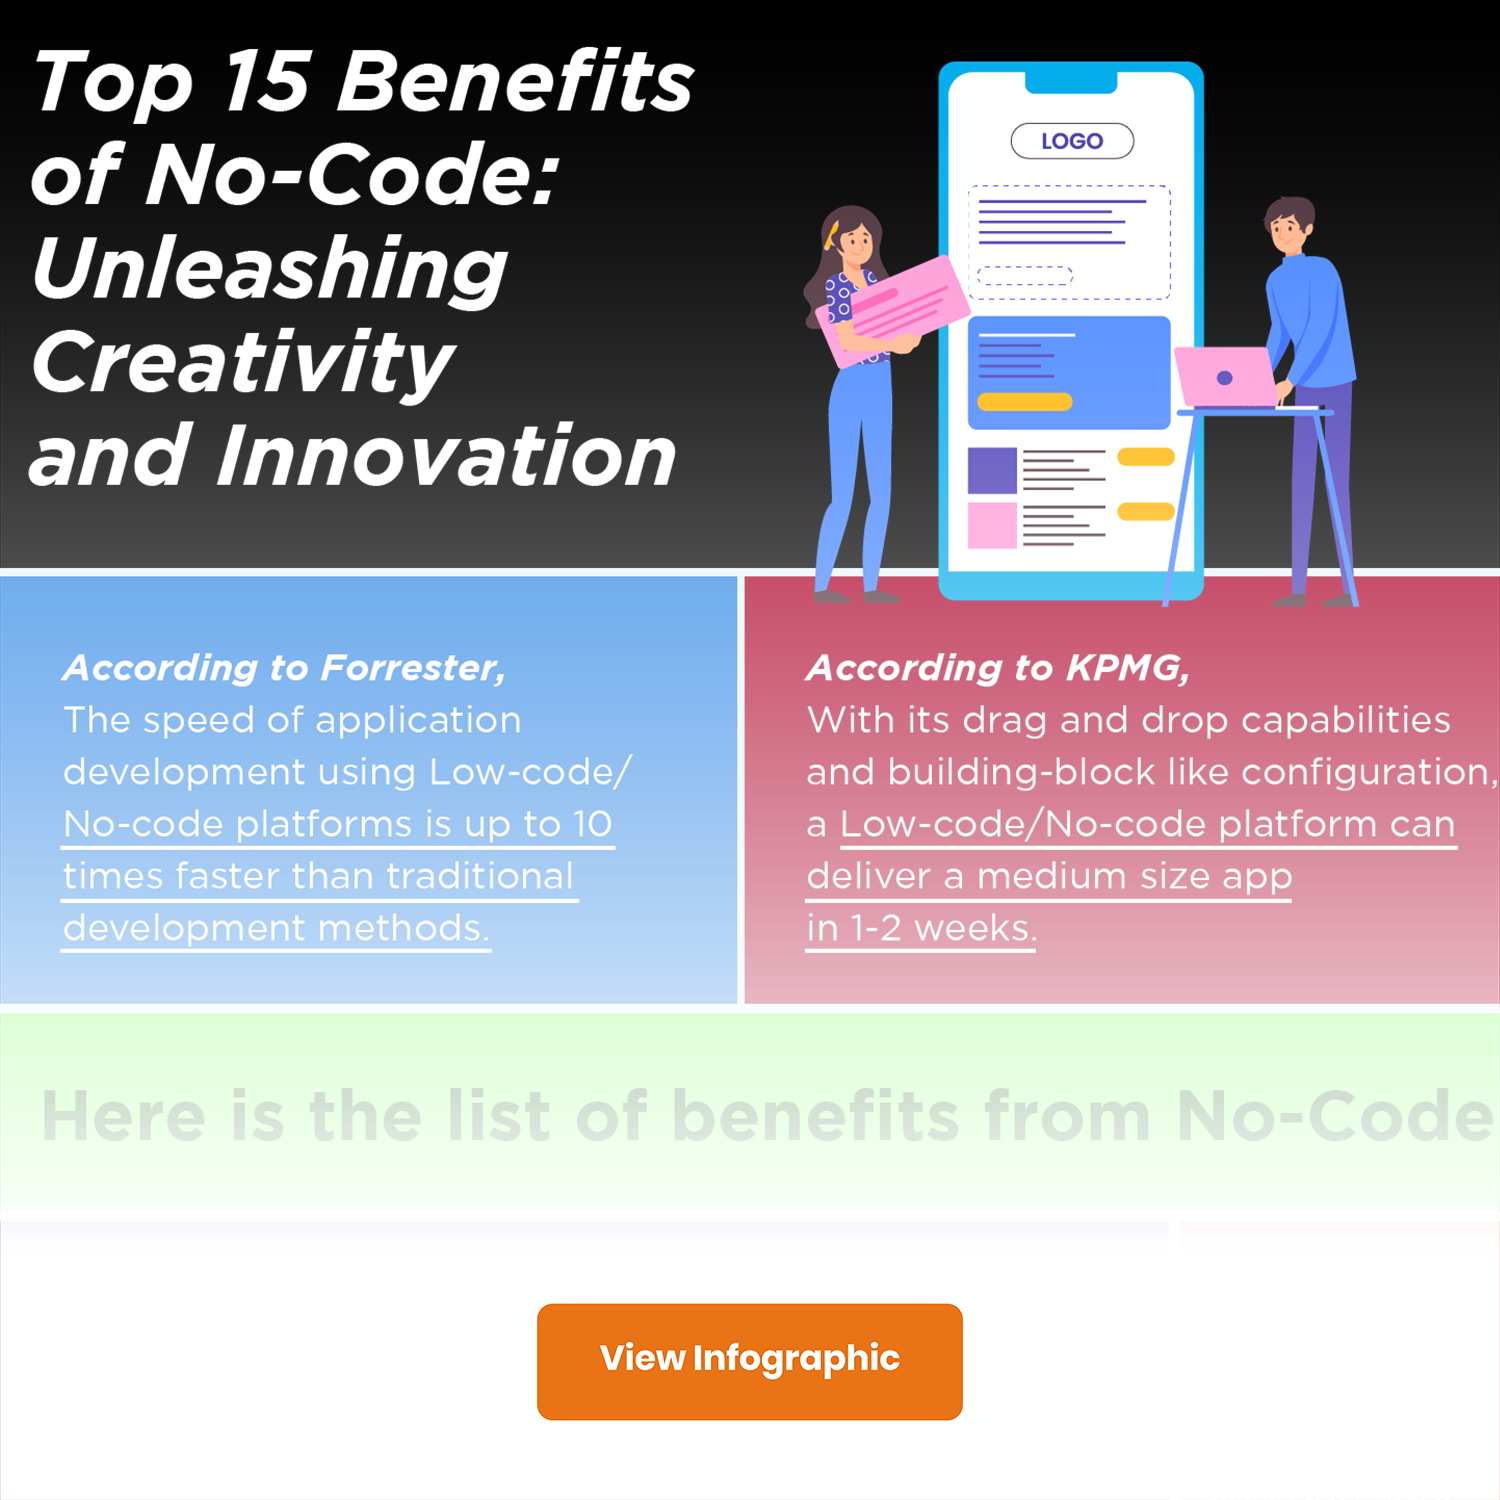 Top 15 Benefits of No-Code - Infographic